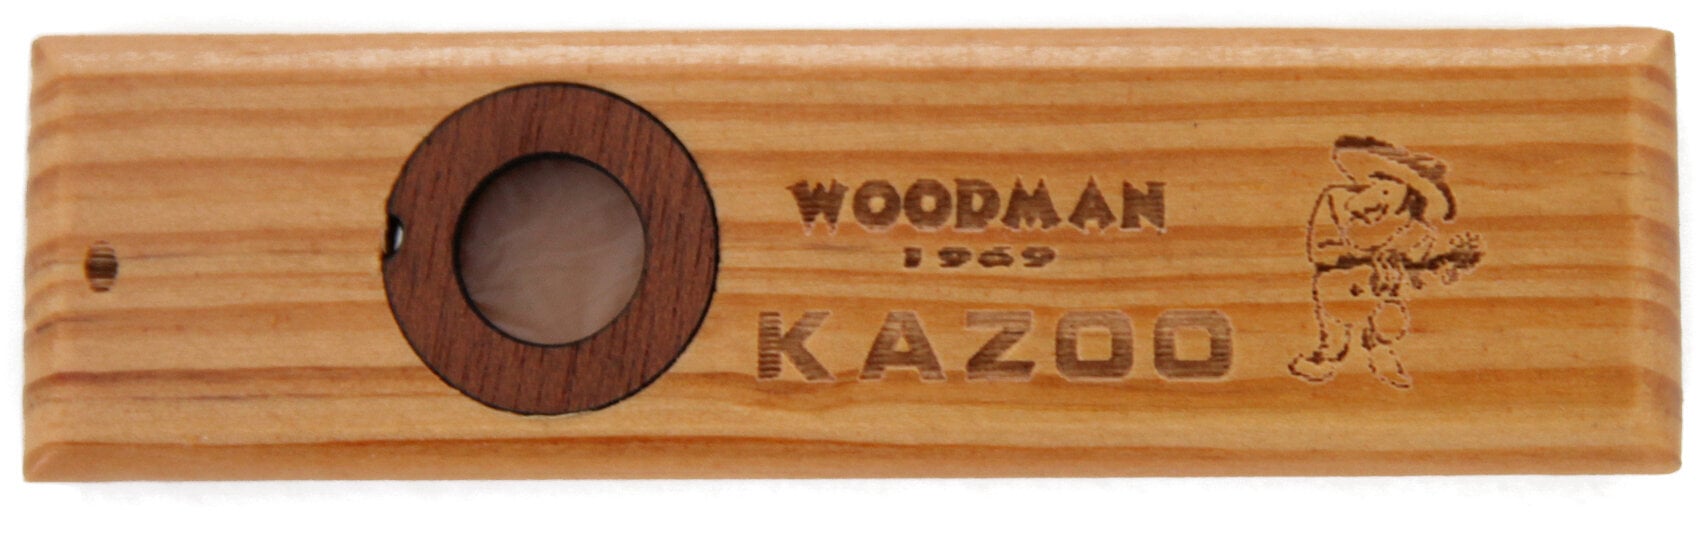 Kazoo Veles-X Woodman Kazoo